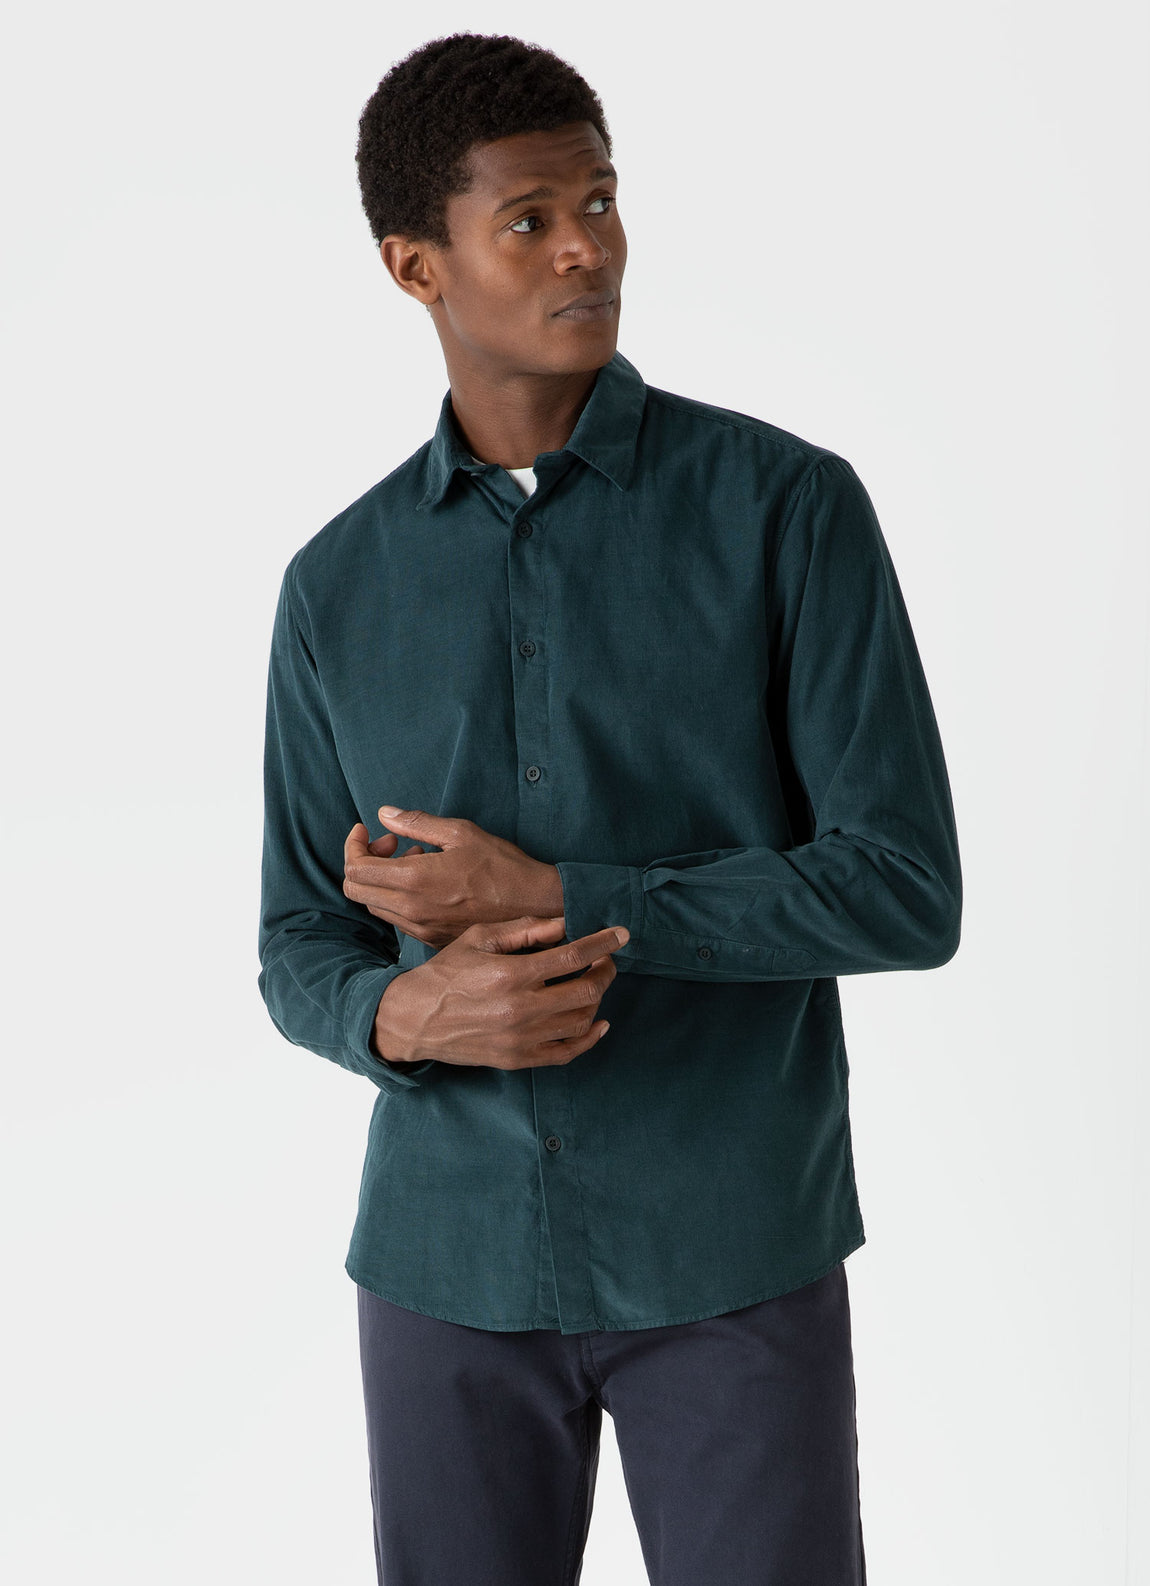 Men's Fine Cord Shirt in Peacock